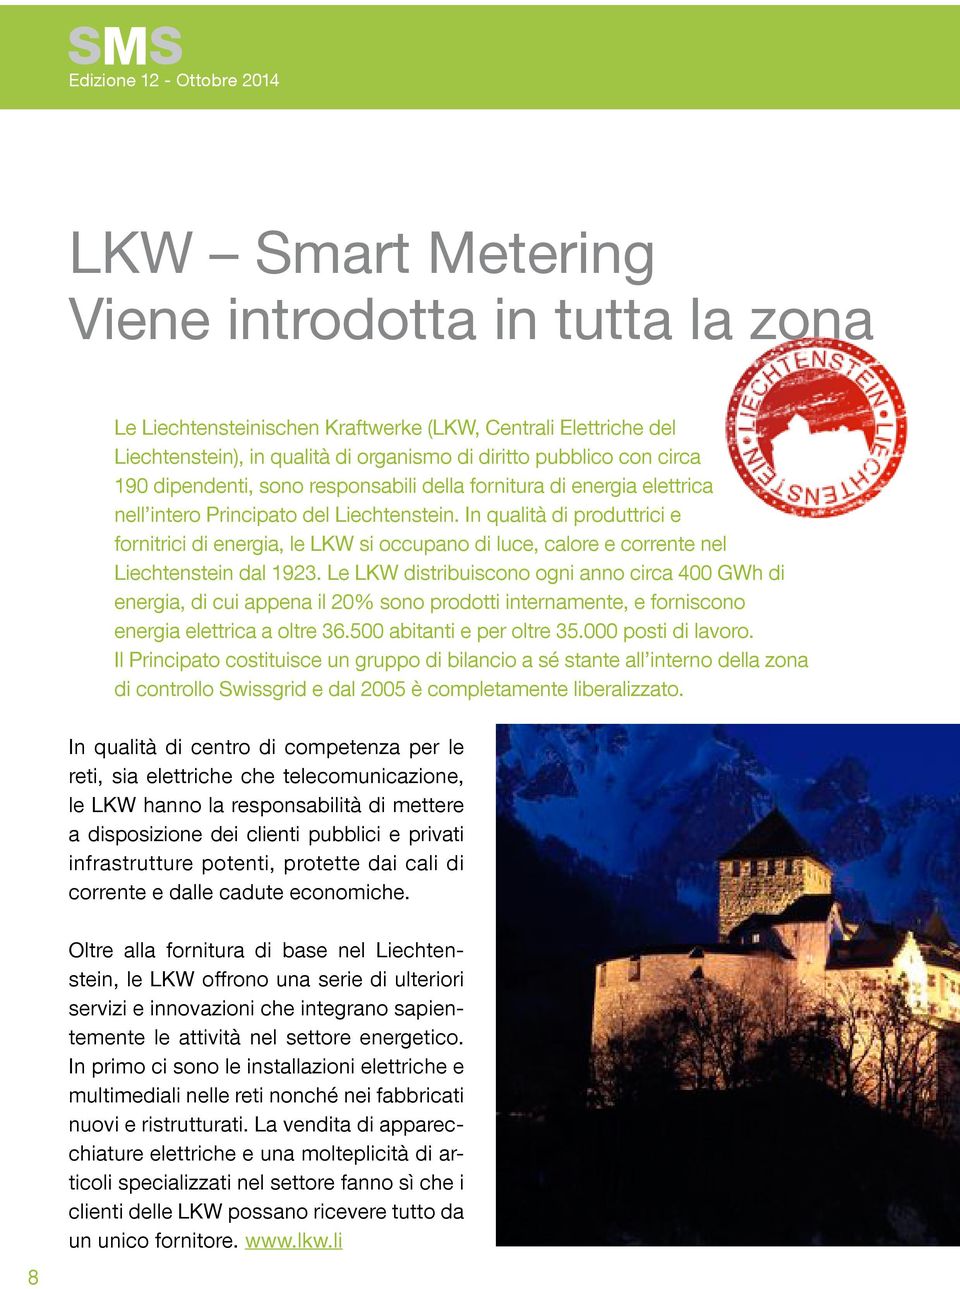 In qualità di produttrici e fornitrici di energia, le LKW si occupano di luce, calore e corrente nel Liechtenstein dal 1923.